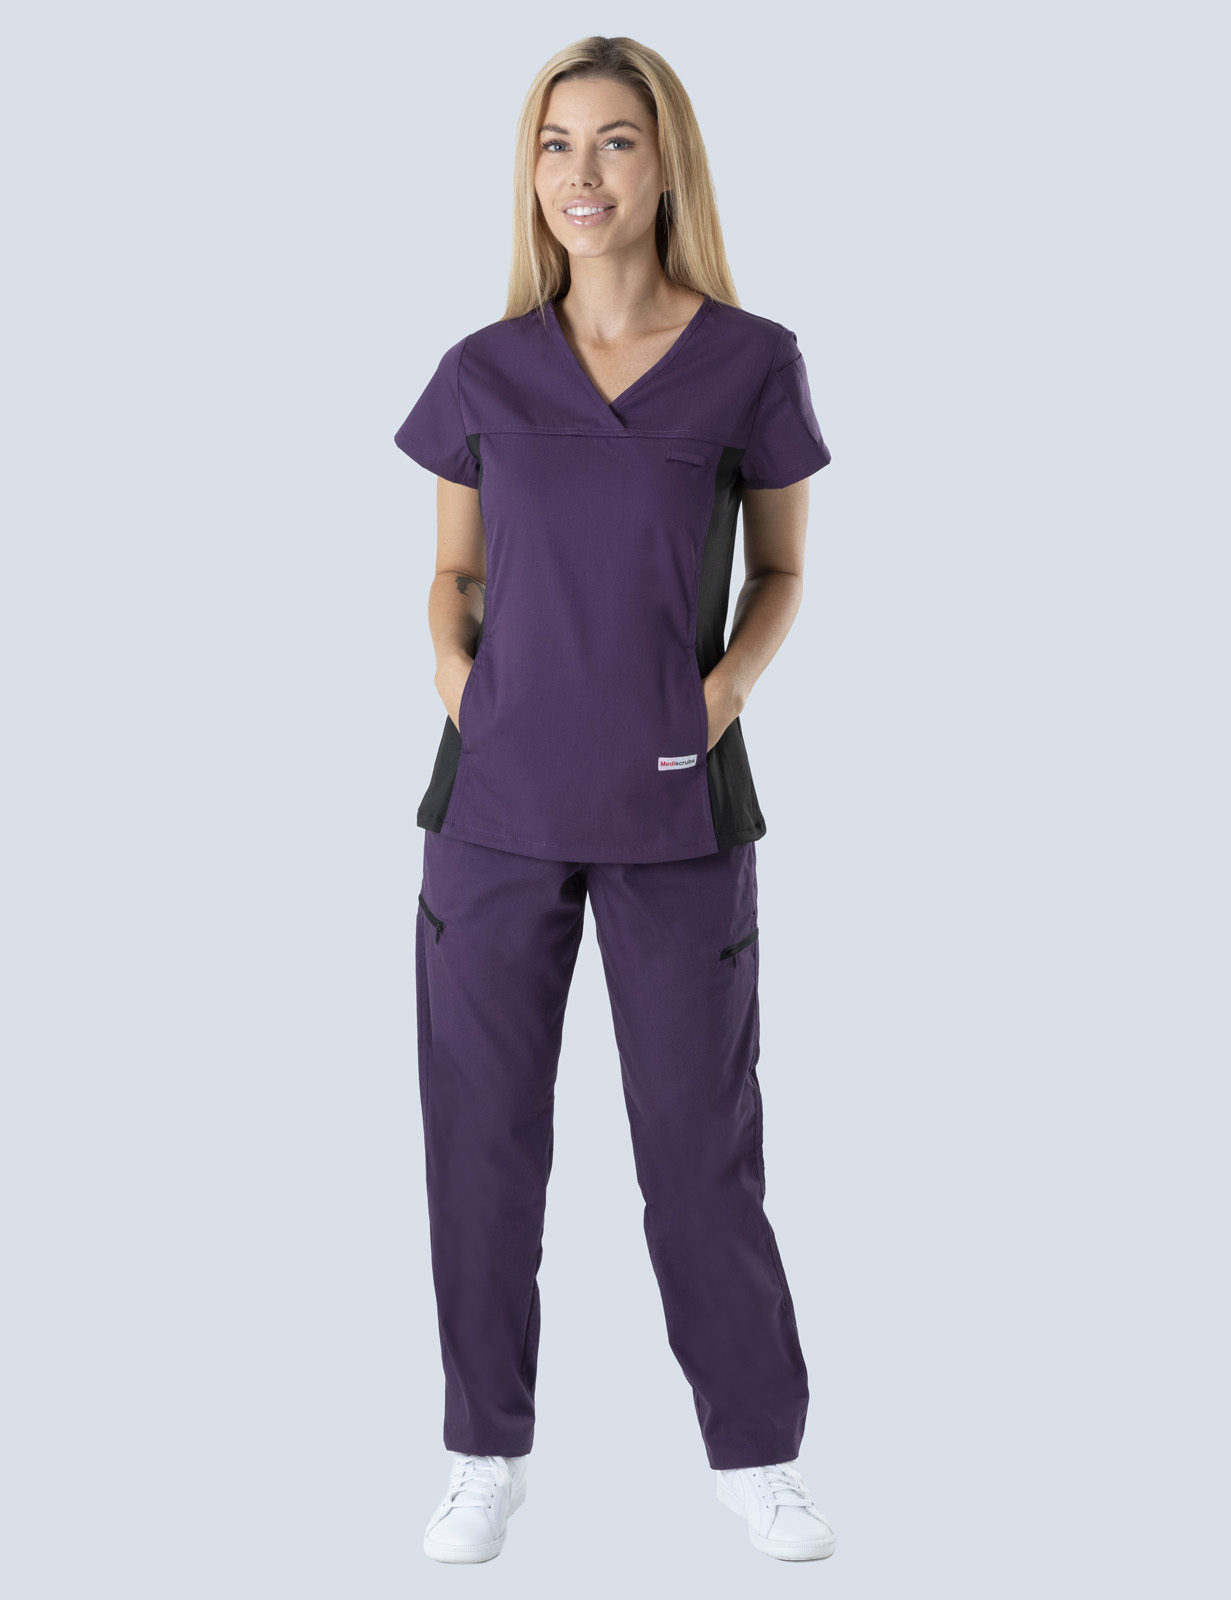 Logan Hospital Birthing Suite Uniform Set Bundle (Women's Fit Spandex Top and Cargo Pants in Aubergine incl Logo)